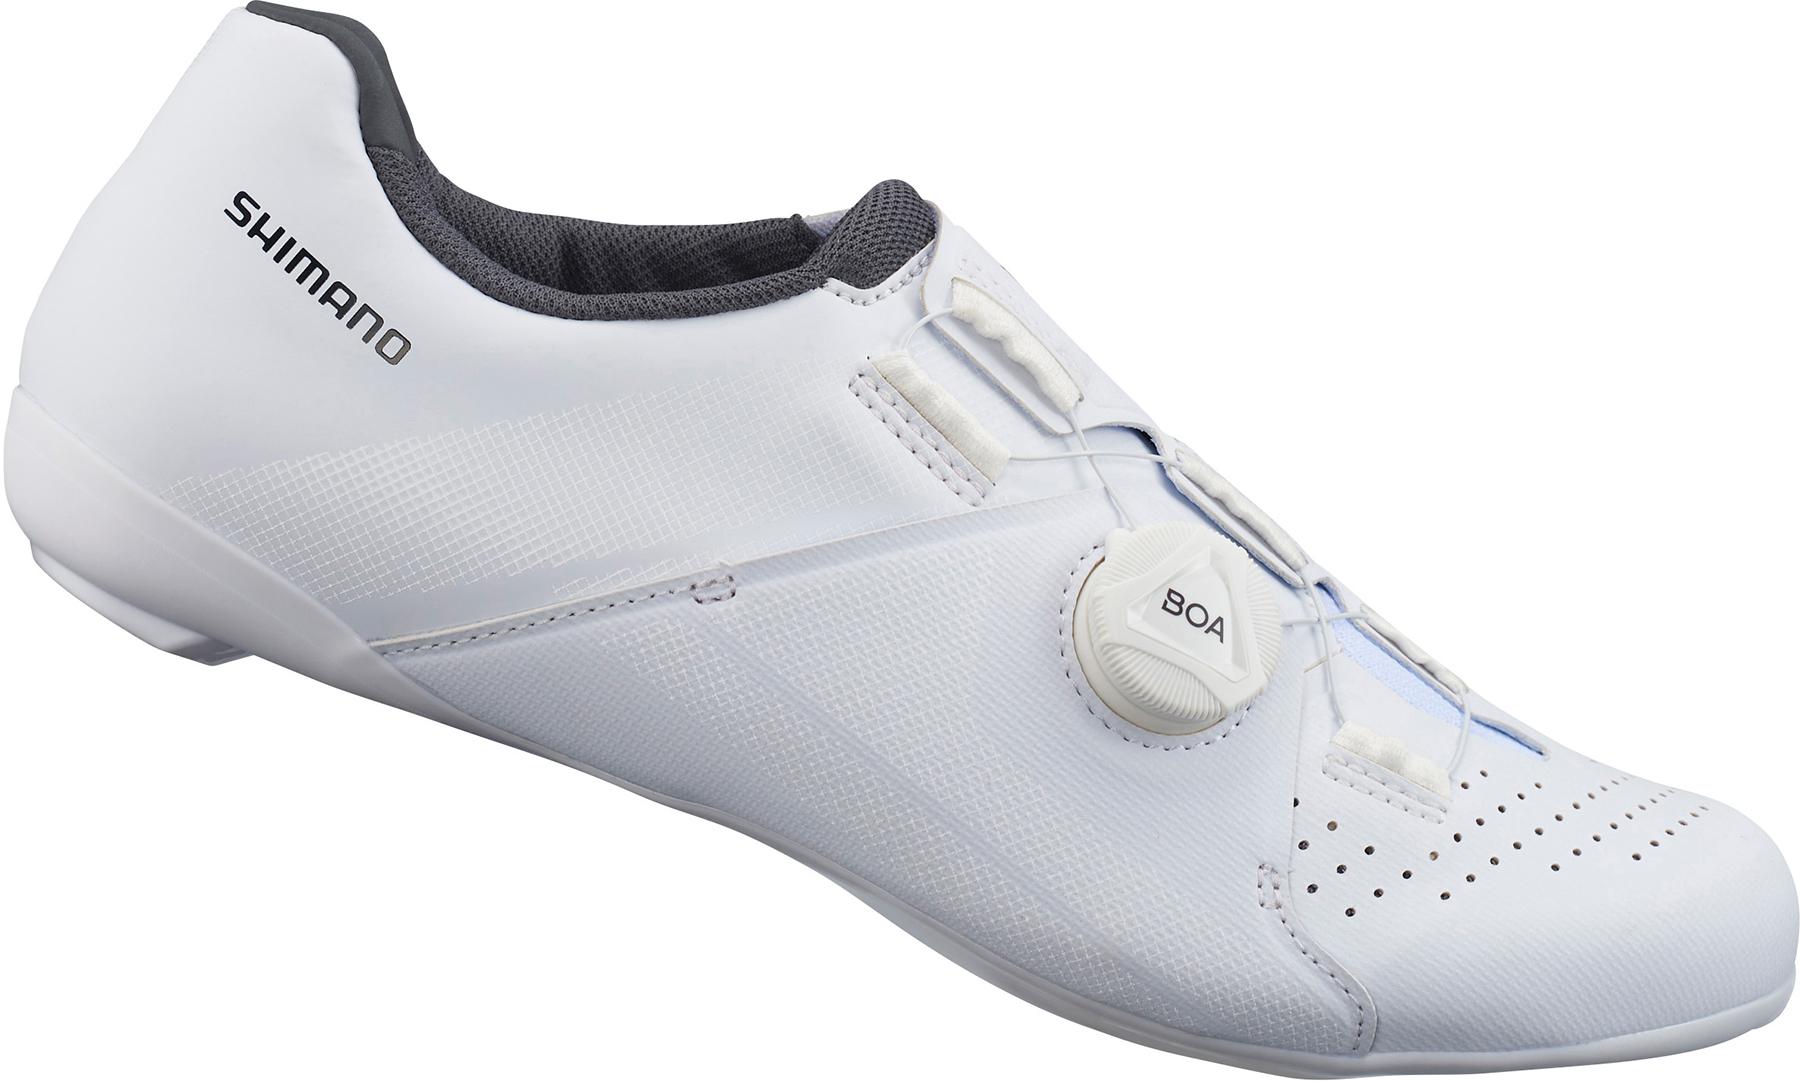 Shimano Womens Rc3 Road Shoes - White